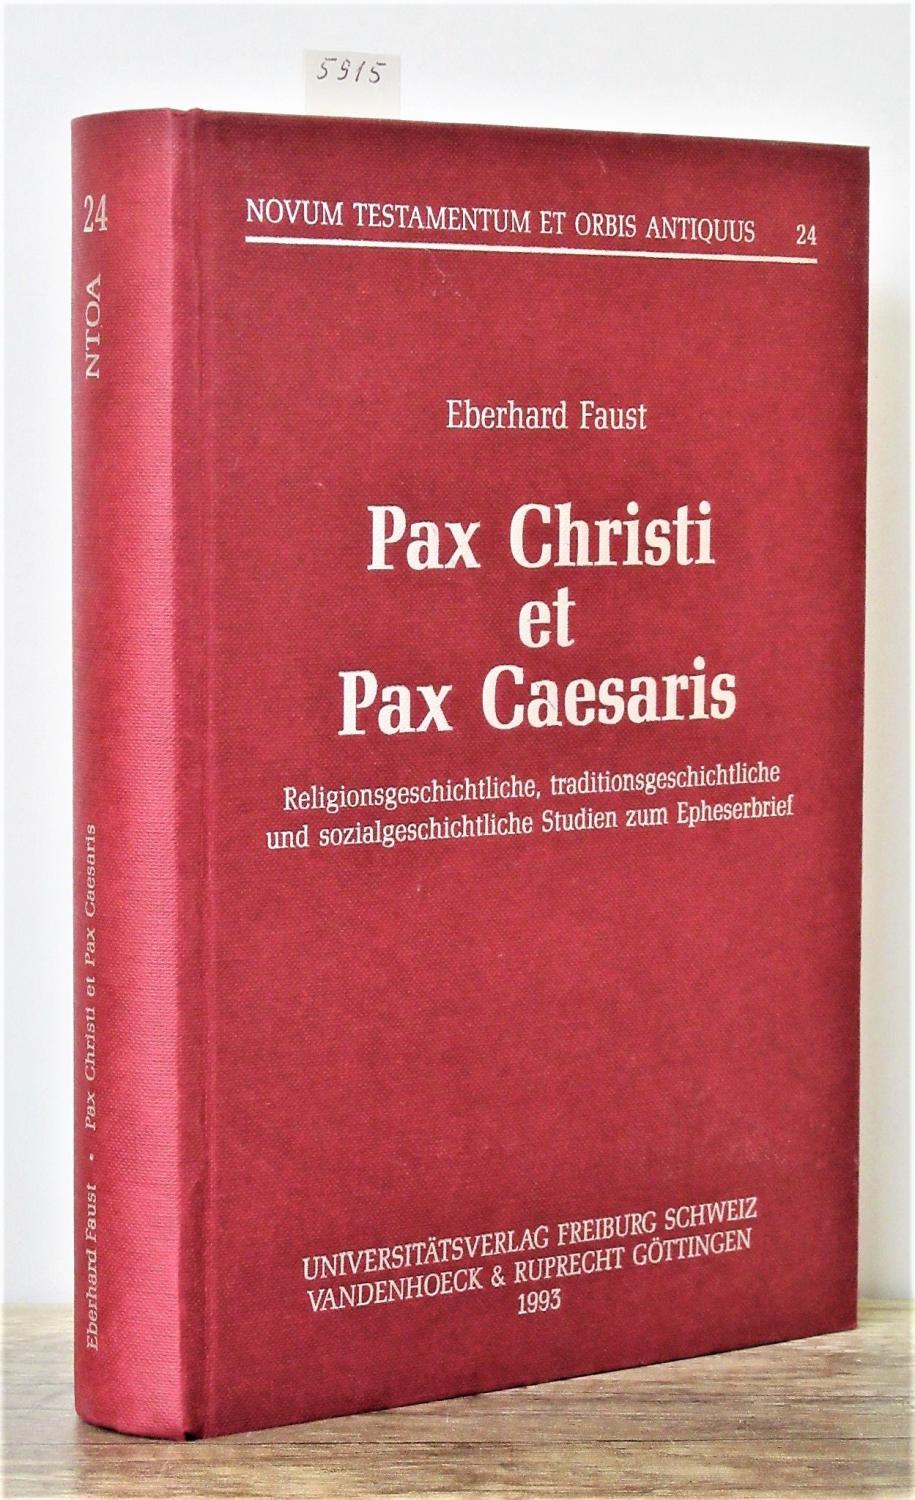 Pax Christi et Pax Caesaris. Religionsgeschichtliche, traditionsgeschichtliche und sozialgeschichtliche Studien zum Epheserbrief. - Faust, Eberhard